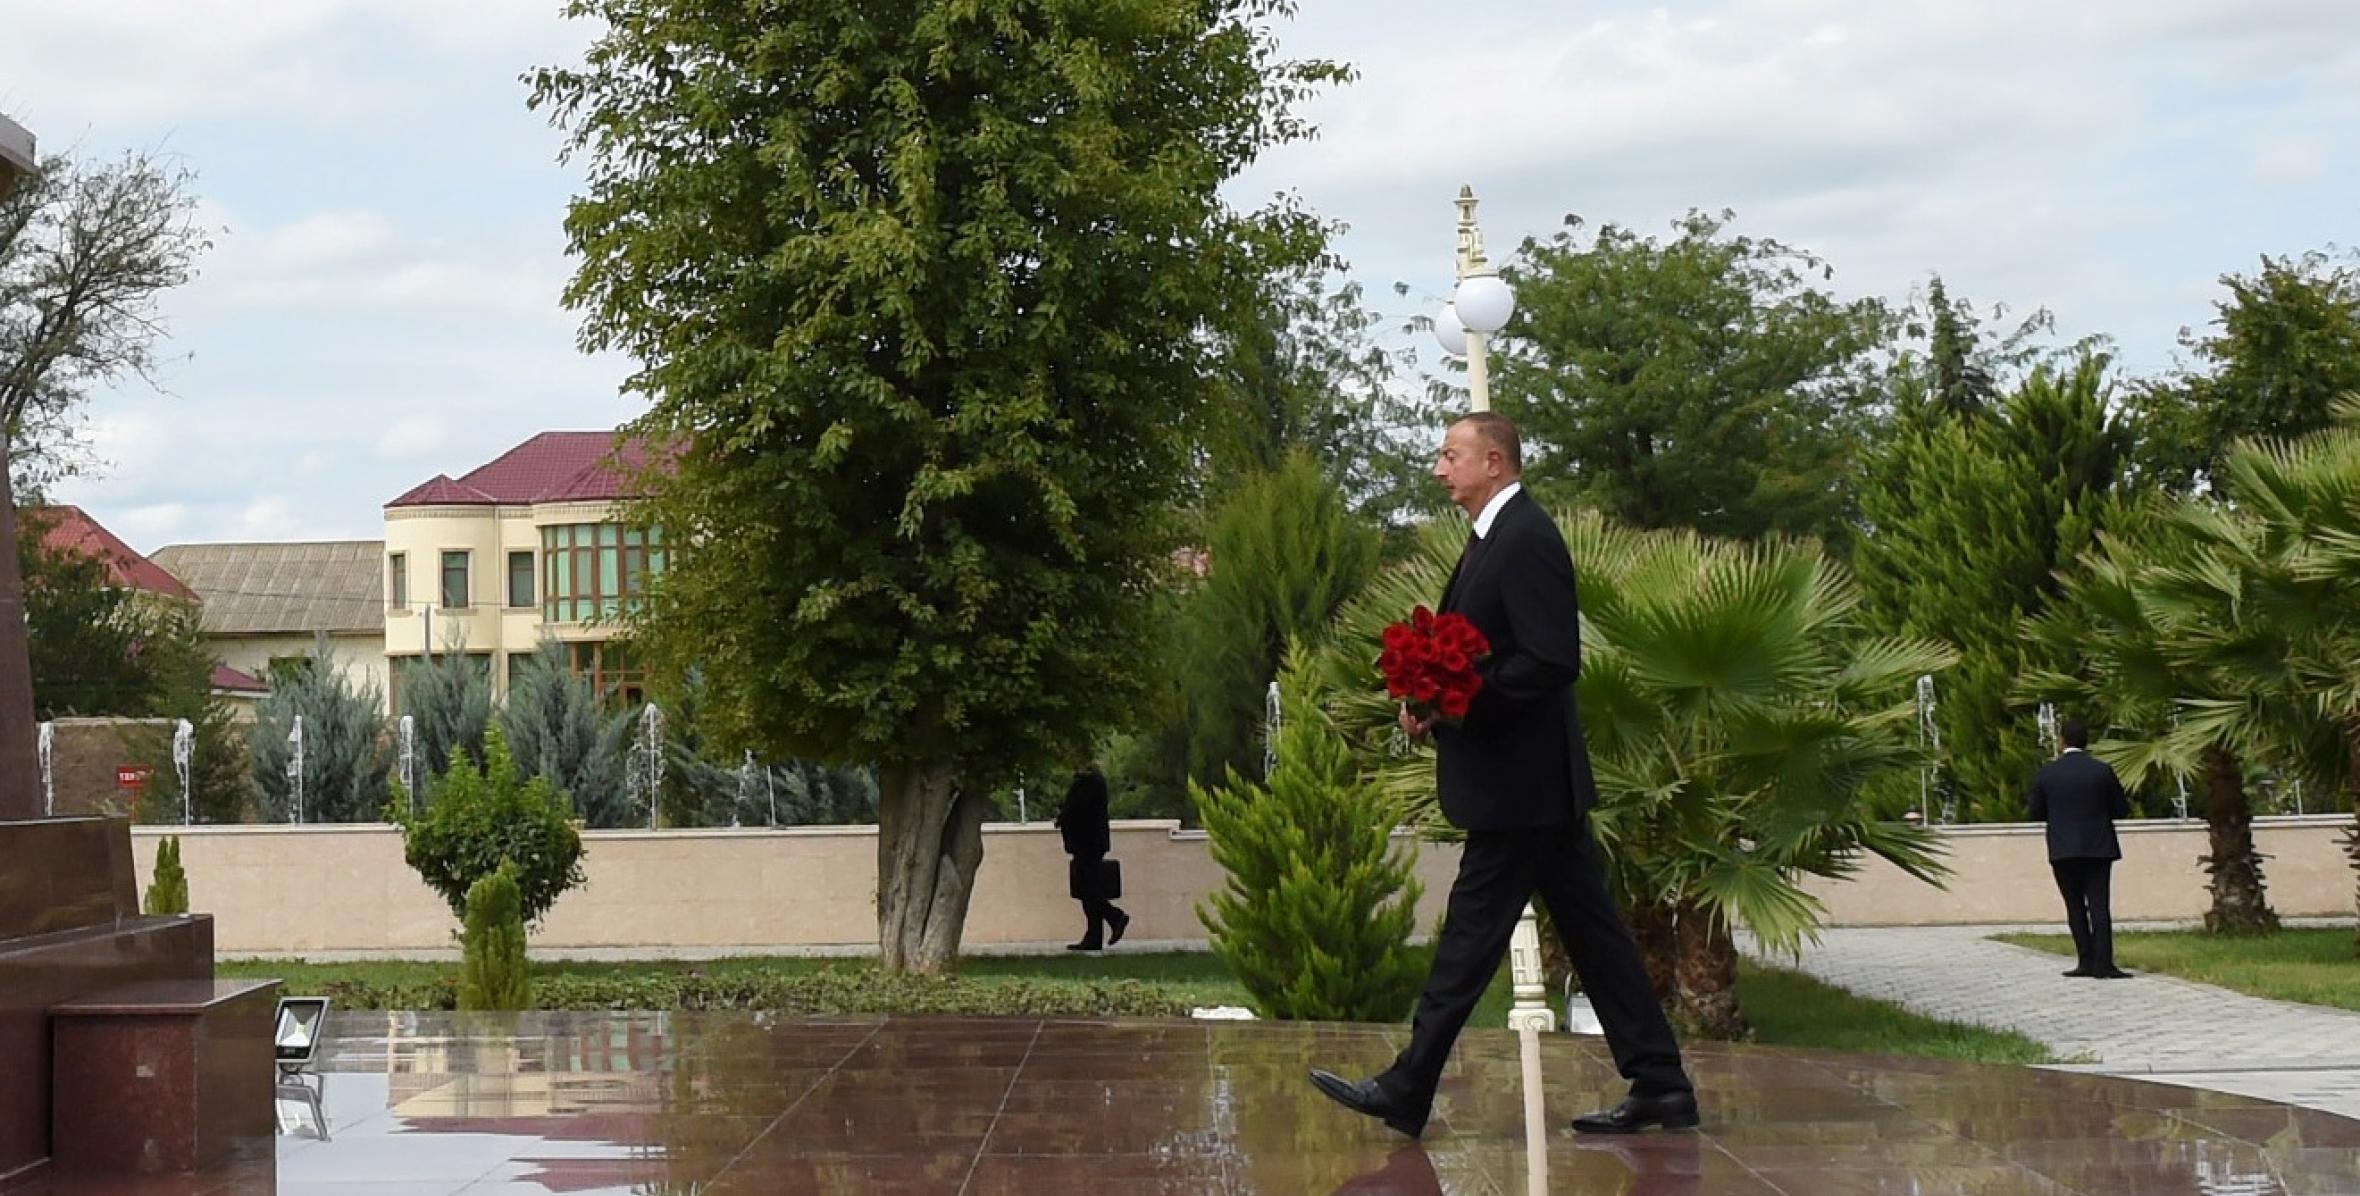 Ilham Aliyev arrived in Salyan district for a visit